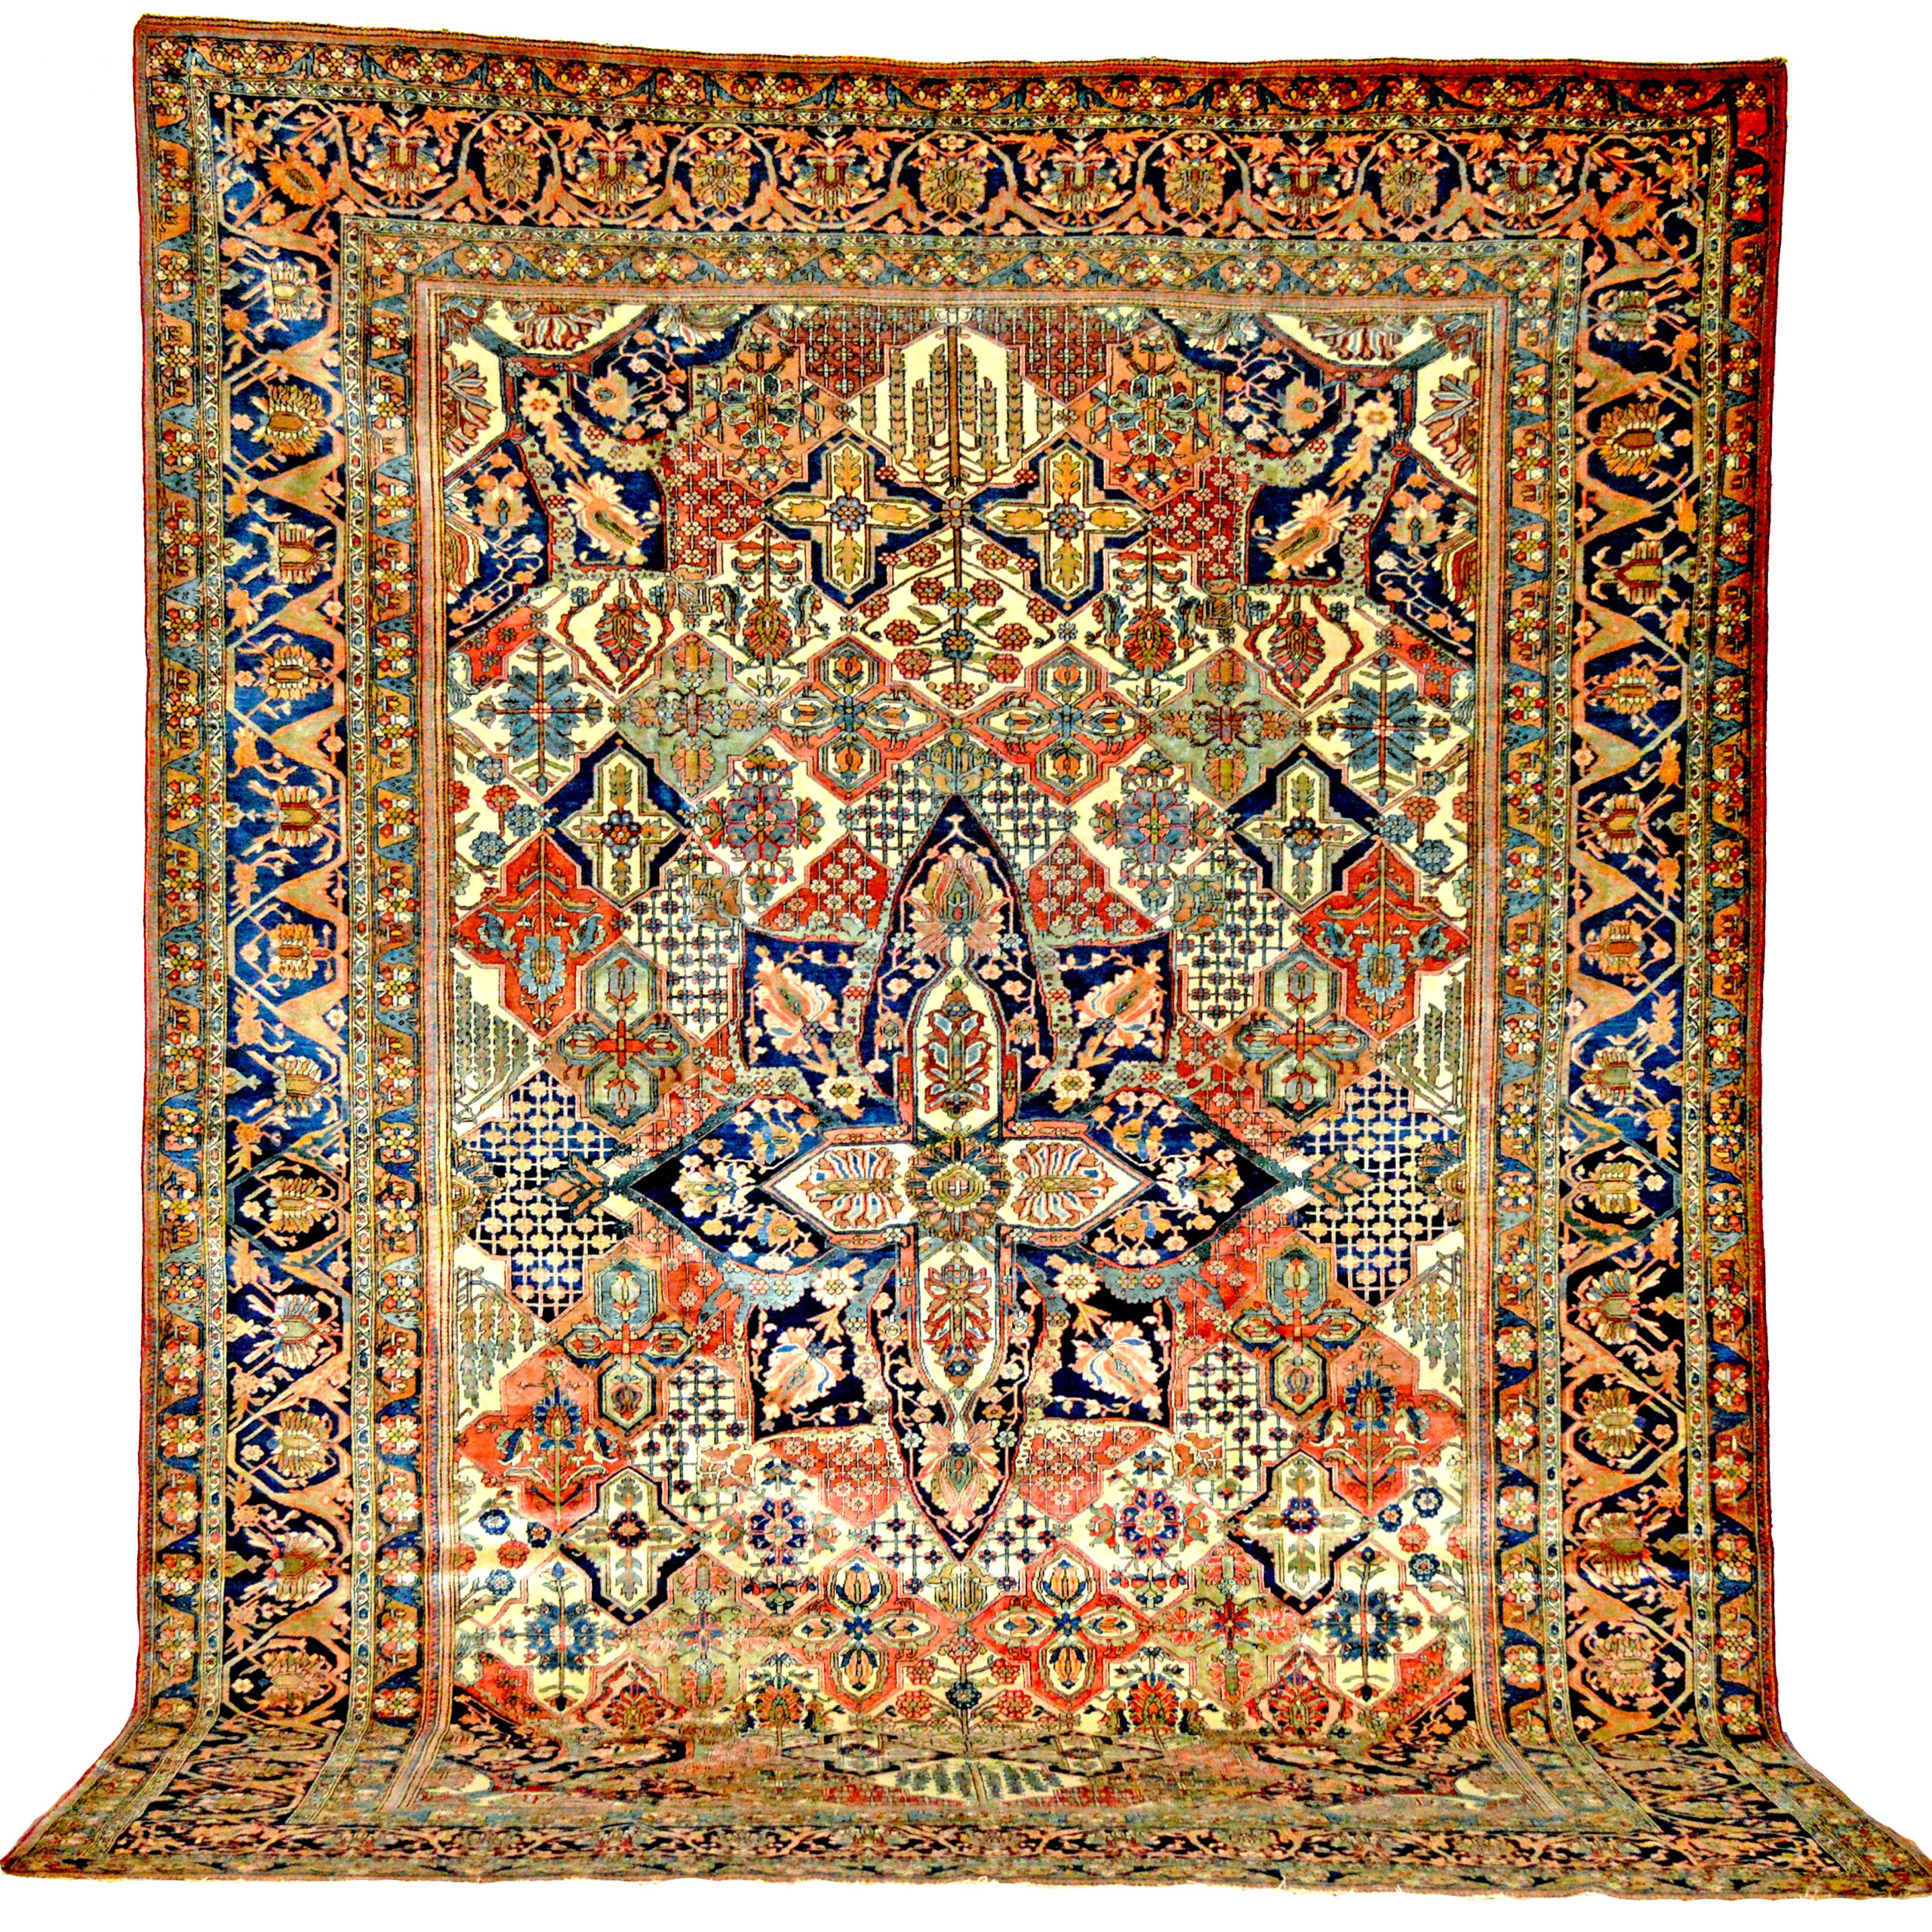 Antique Persian Mohtasham Kashan carpet with garden panel design, central Persia, circa 1890